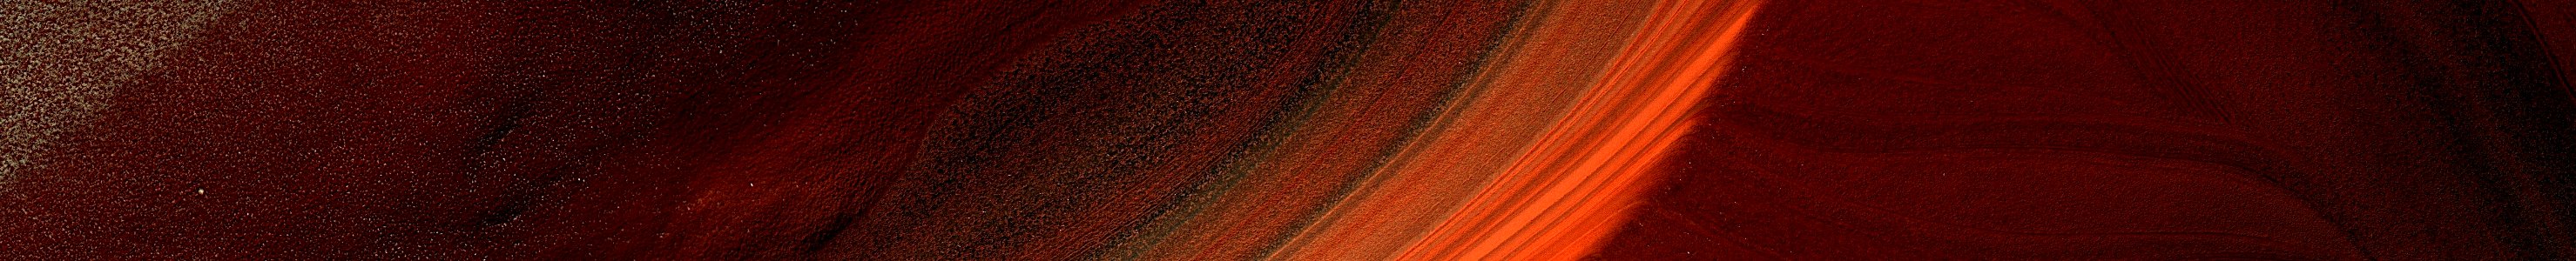 Mars - Exposure of North Polar Layered Deposits photo